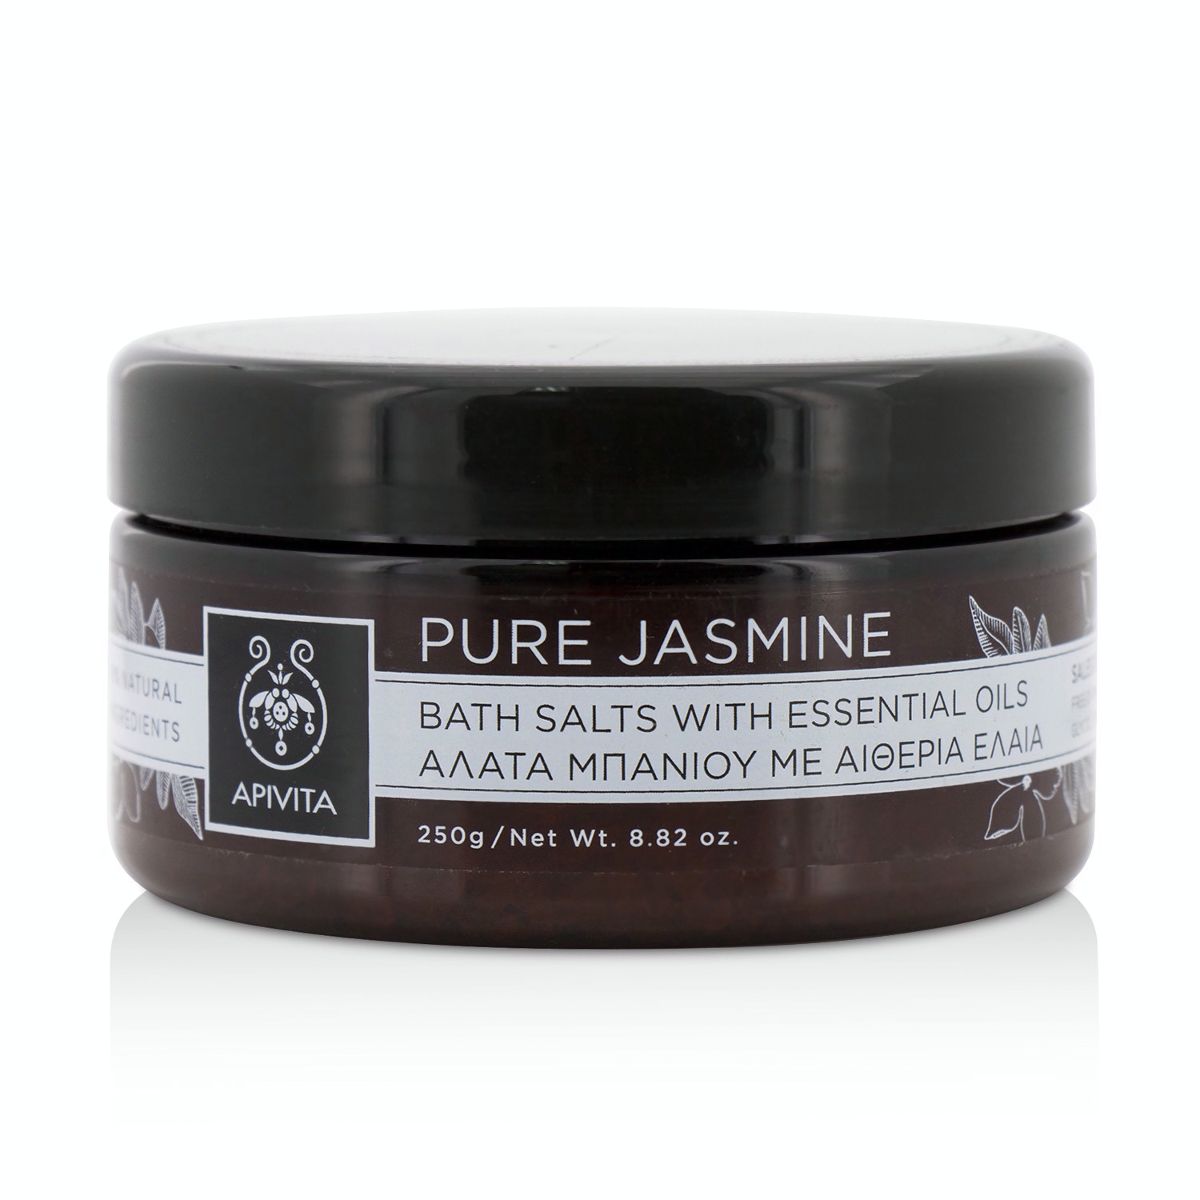 Pure Jasmine Bath Salts With Essential Oils Apivita Image